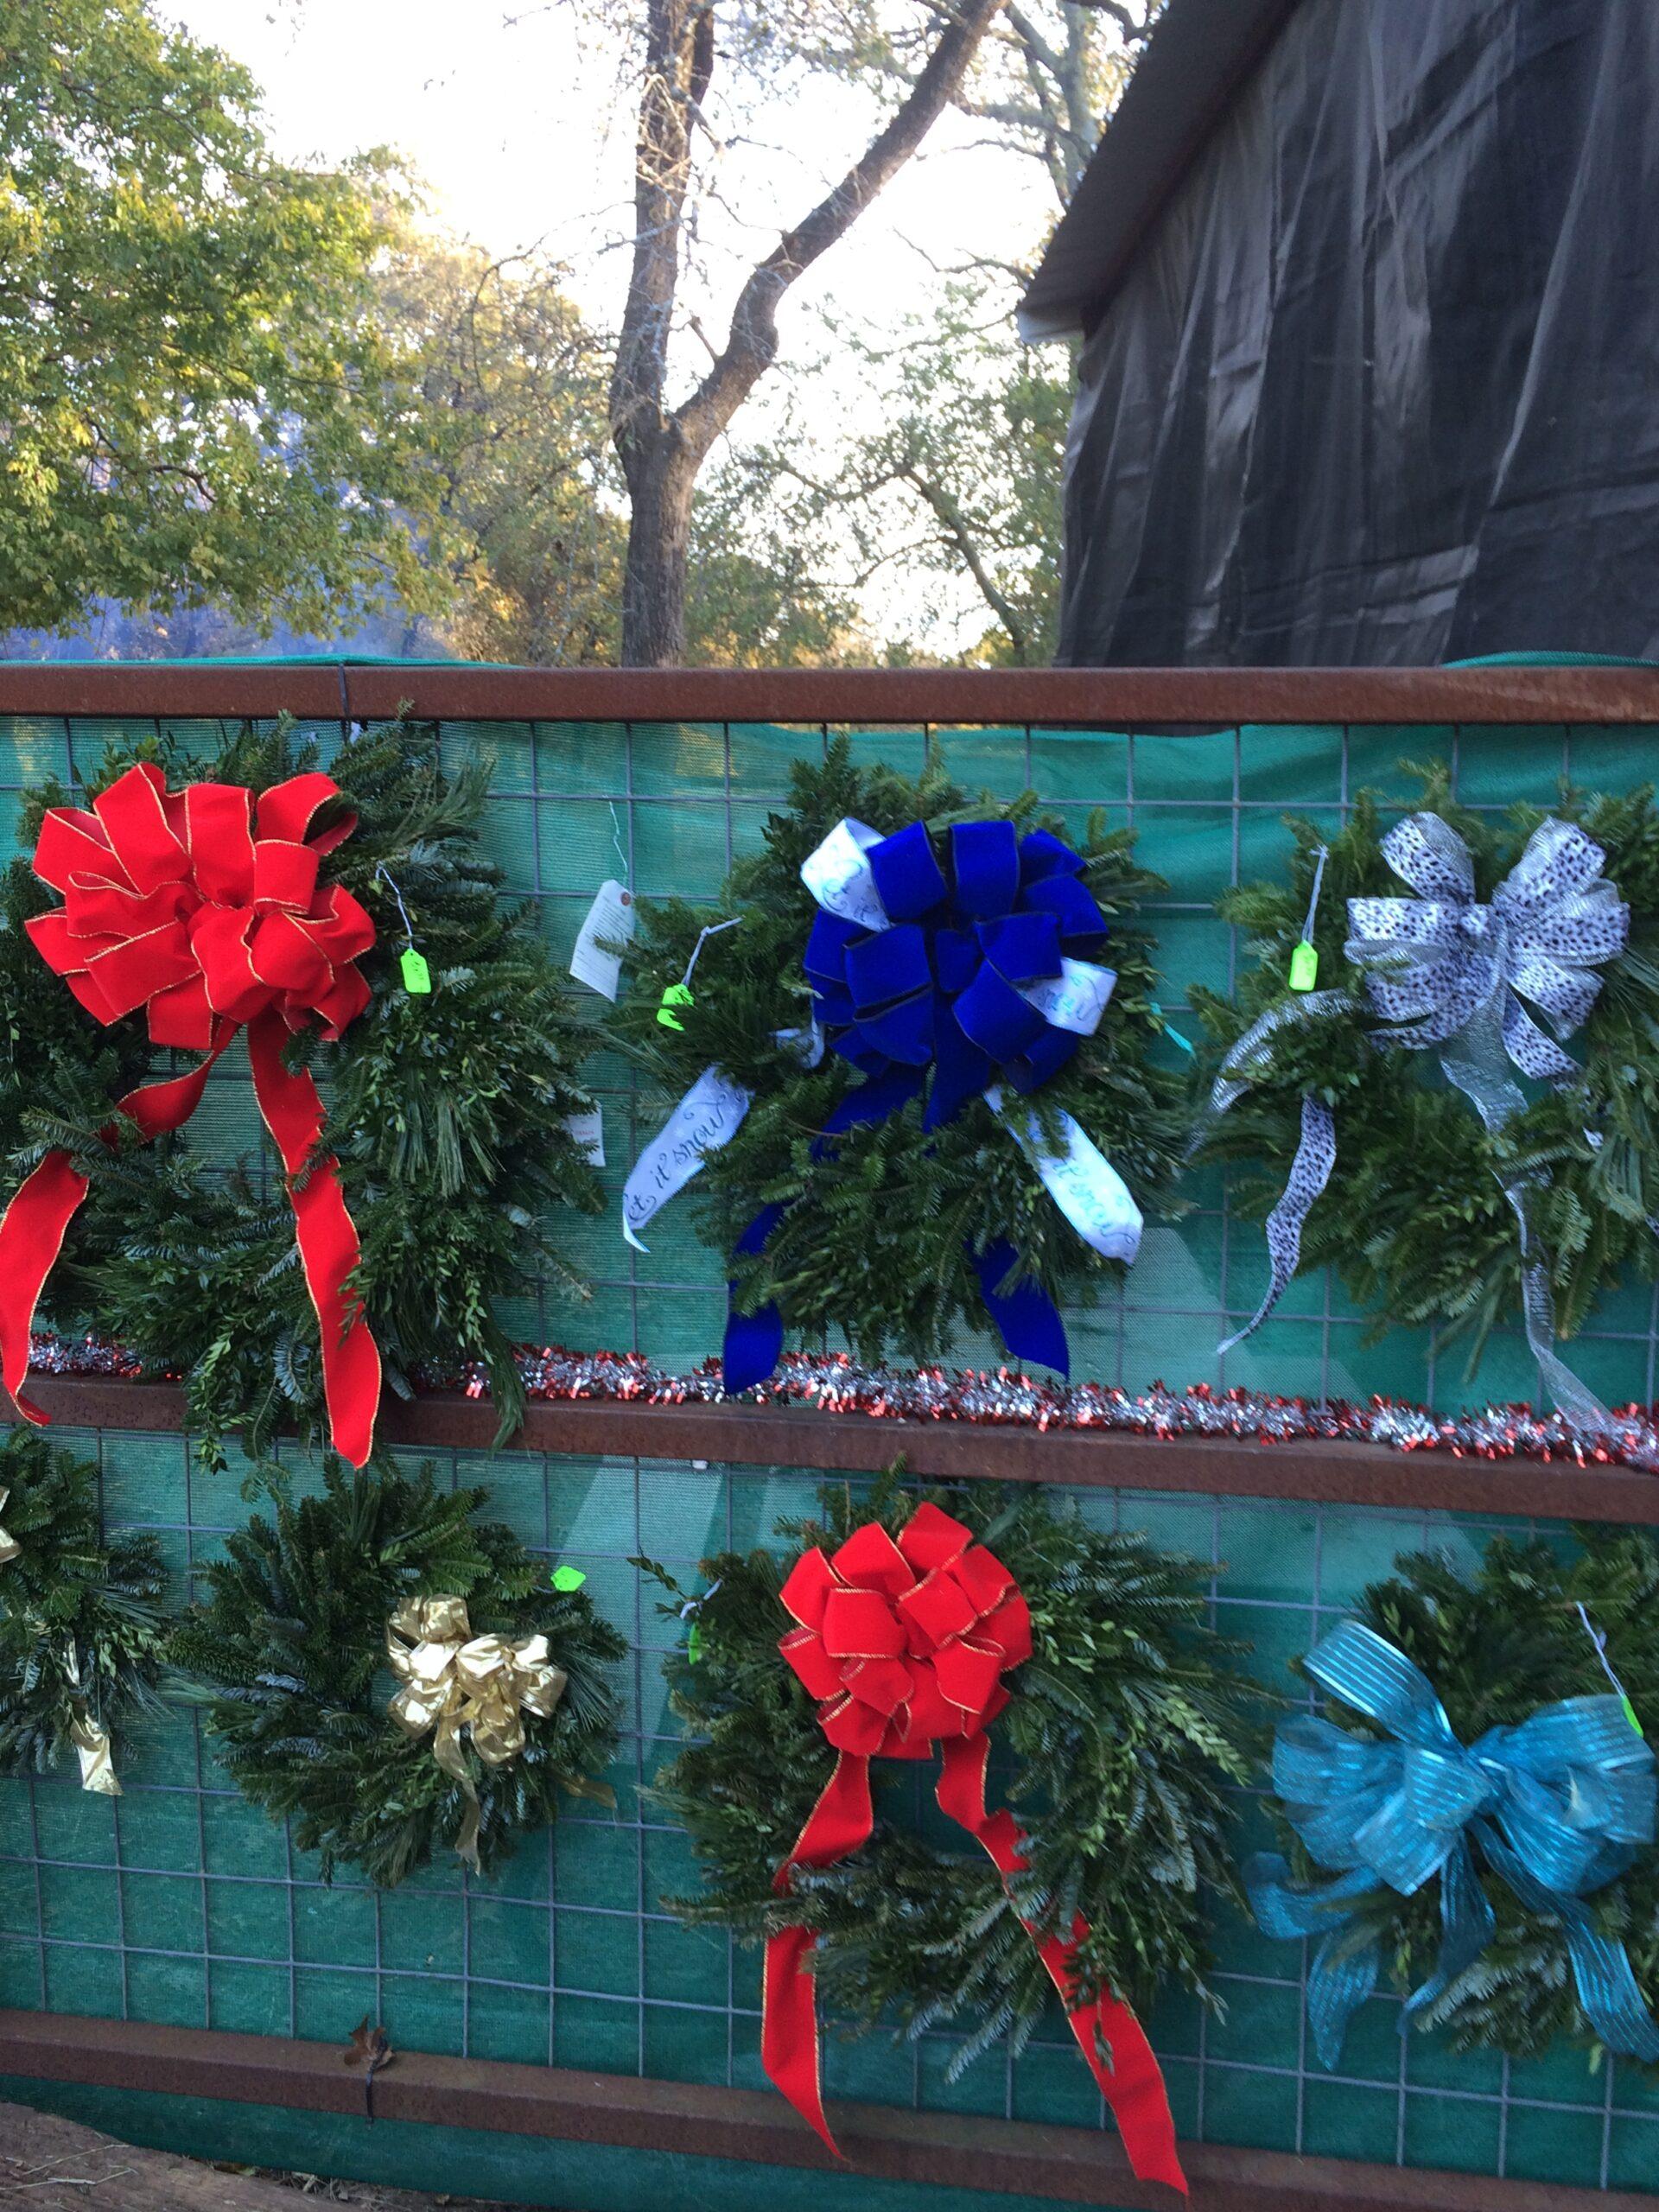 A row of our custom made wreaths available for sale at Haynie's Green Acres Christmas Tree Farm